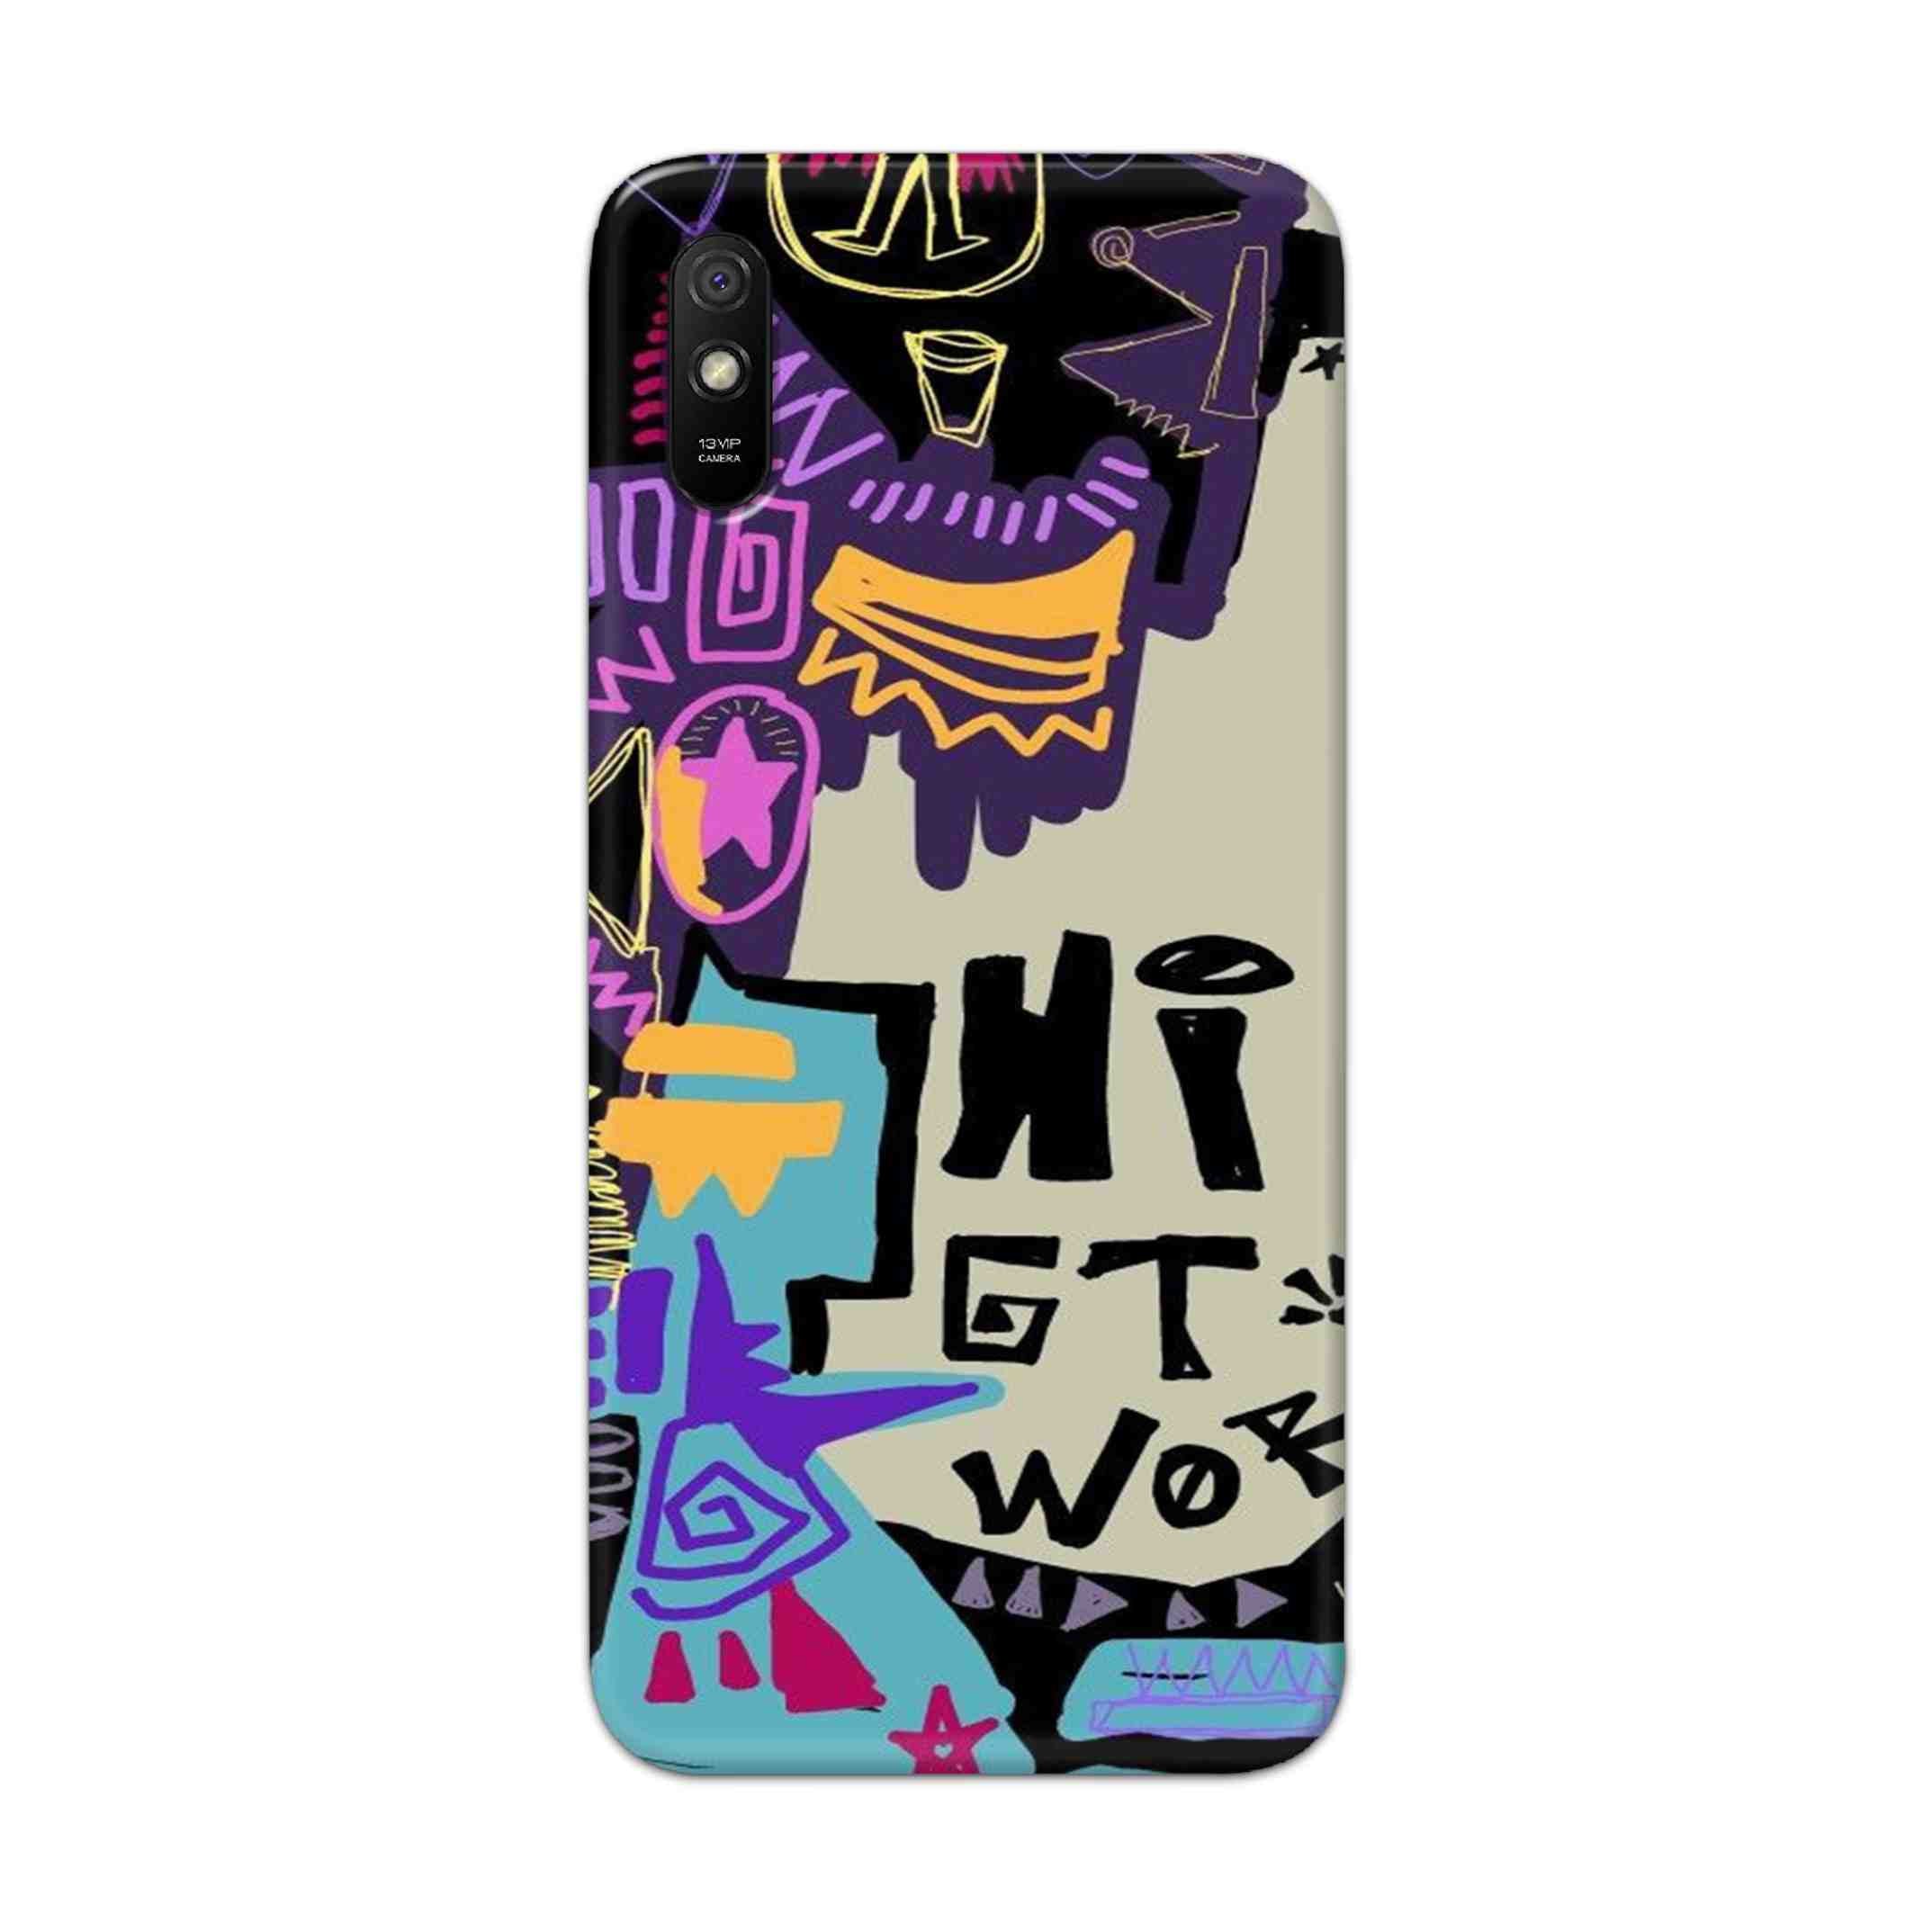 Buy Hi Gt World Hard Back Mobile Phone Case Cover For Redmi 9A Online